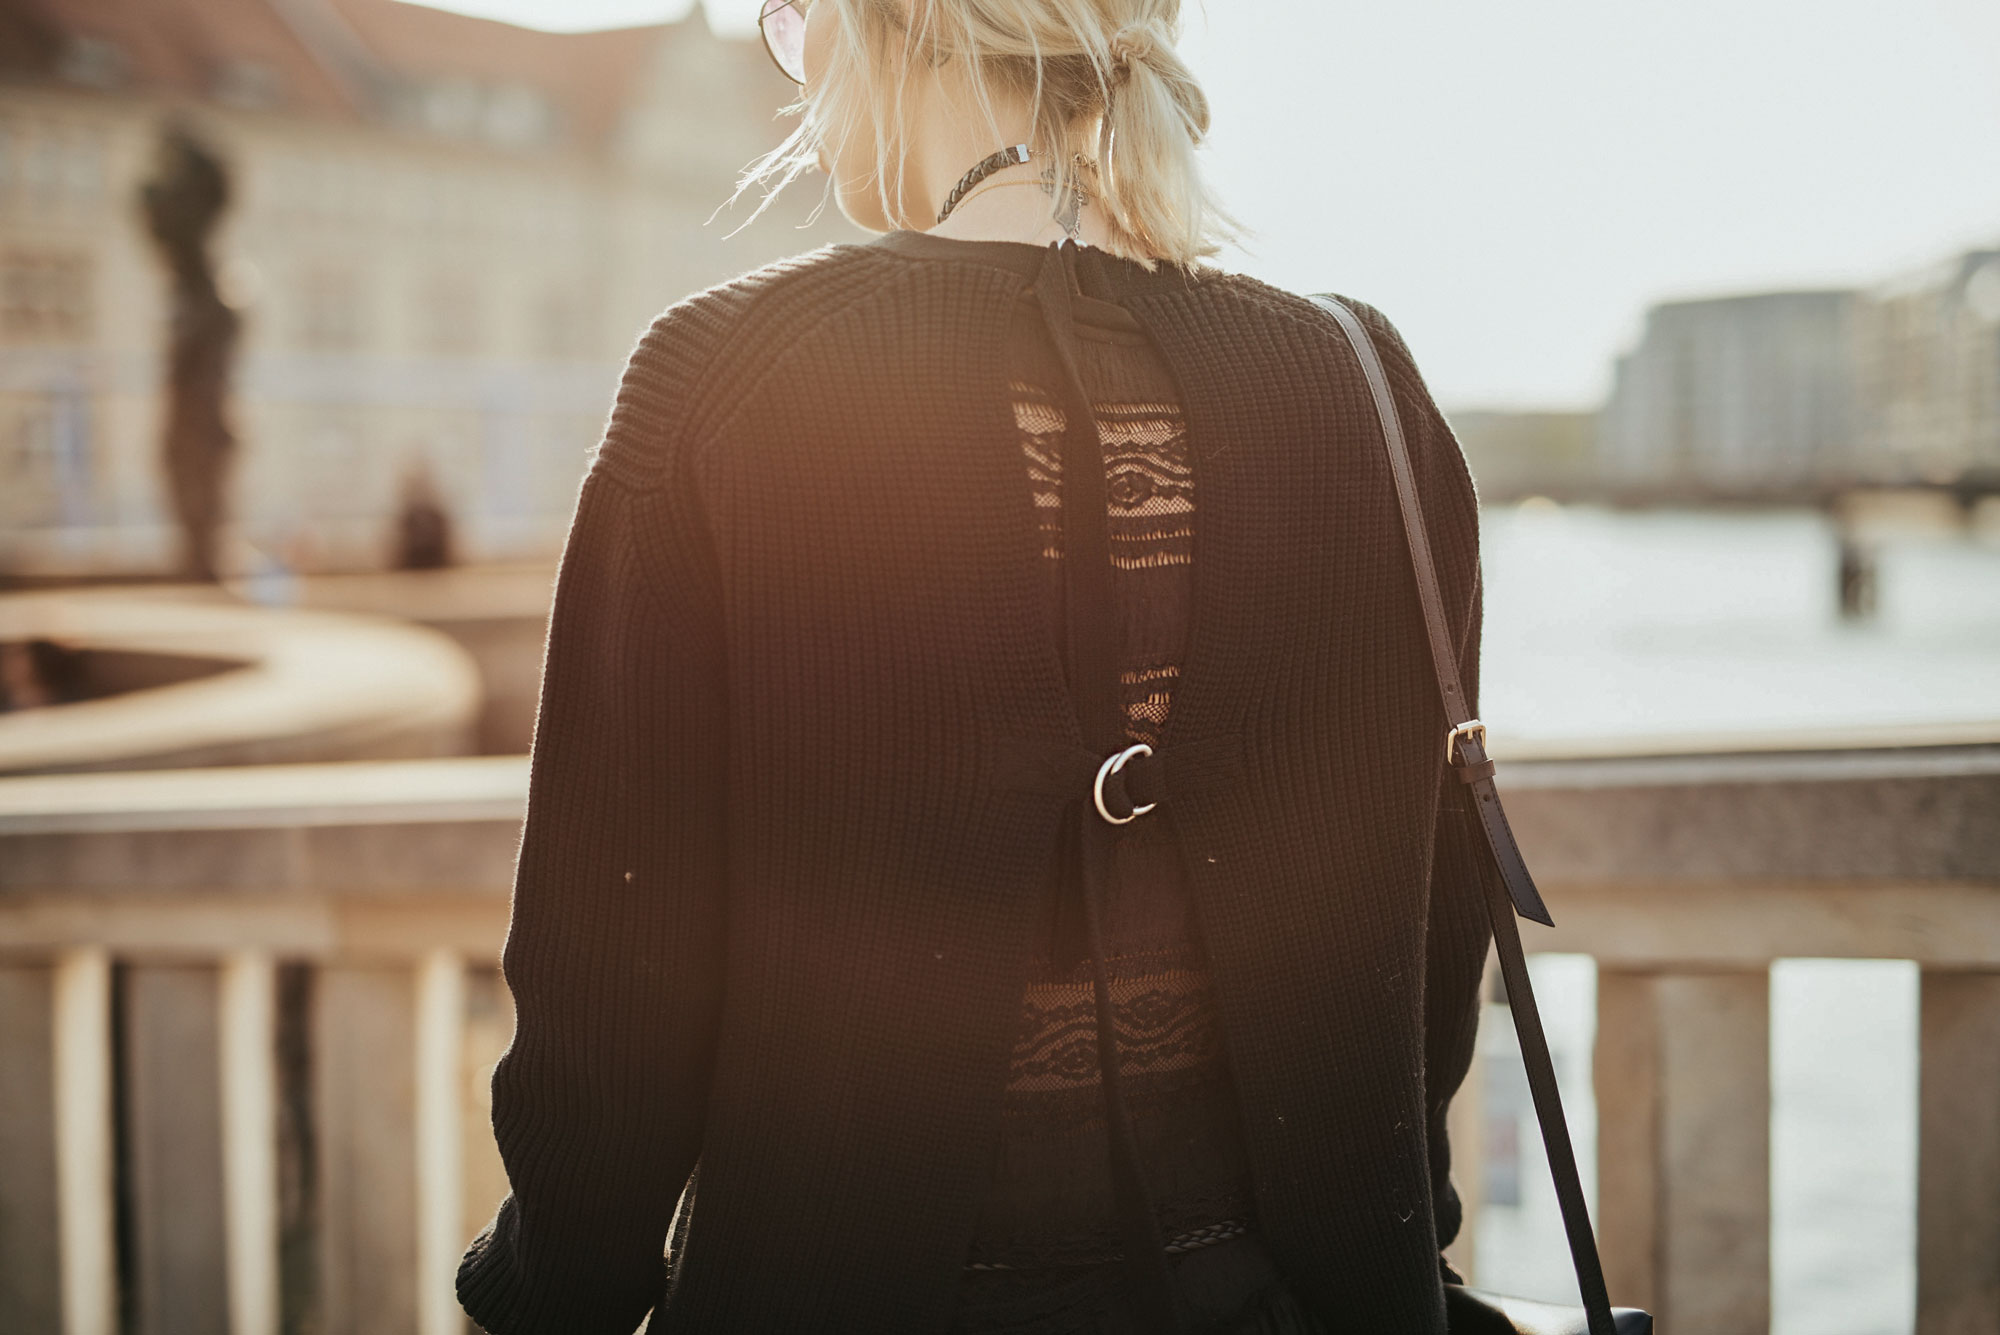 Autumn Trend: black lace dress | labels: Baum und Pferdgarten, Manu Atelier, Alexander Wang, Givenchy | style: black, edgy, open back, romantic